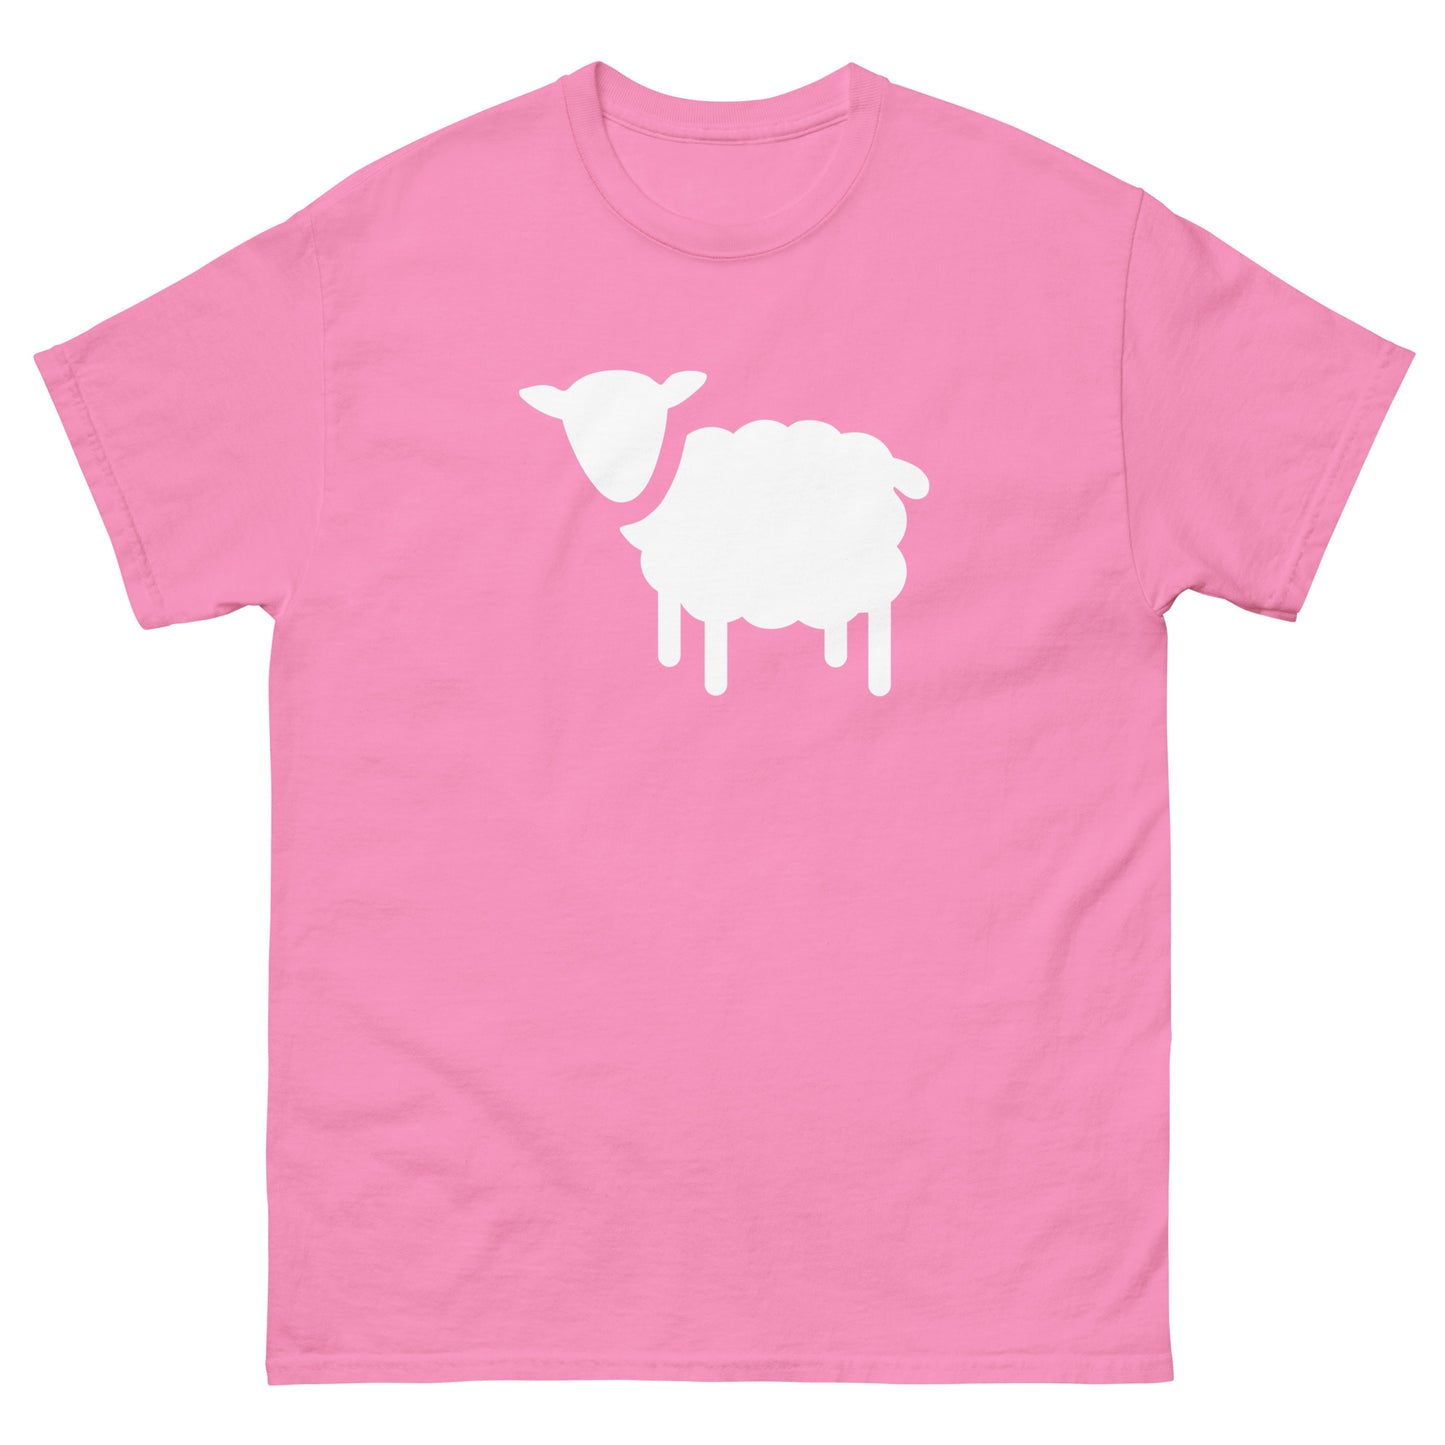 Sheep Tee - Pink